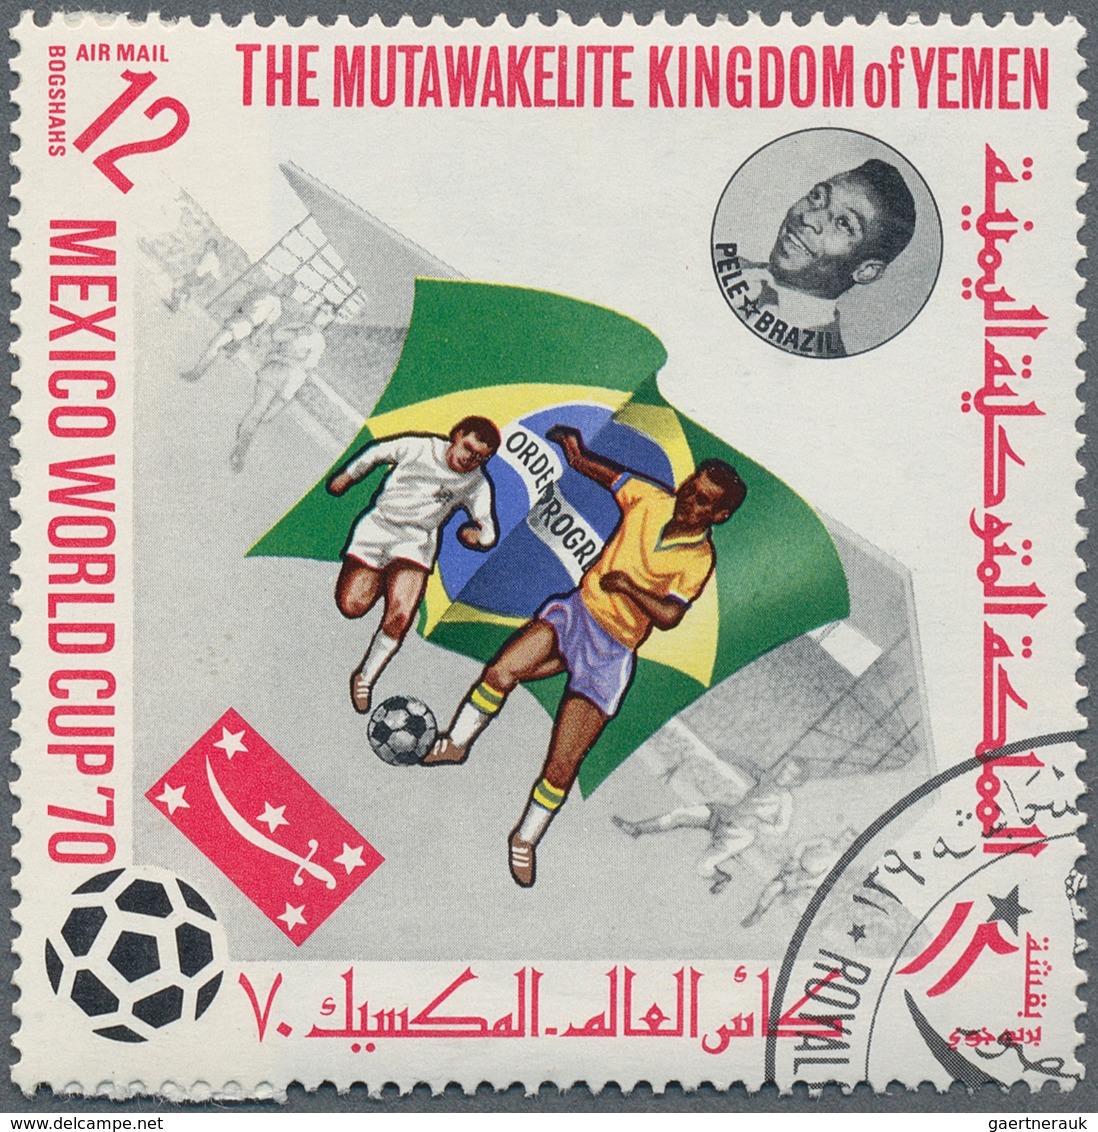 23165 Jemen - Königreich: 1965/1970, chiefly u/m assortment incl. specialities like progressive proofs, va